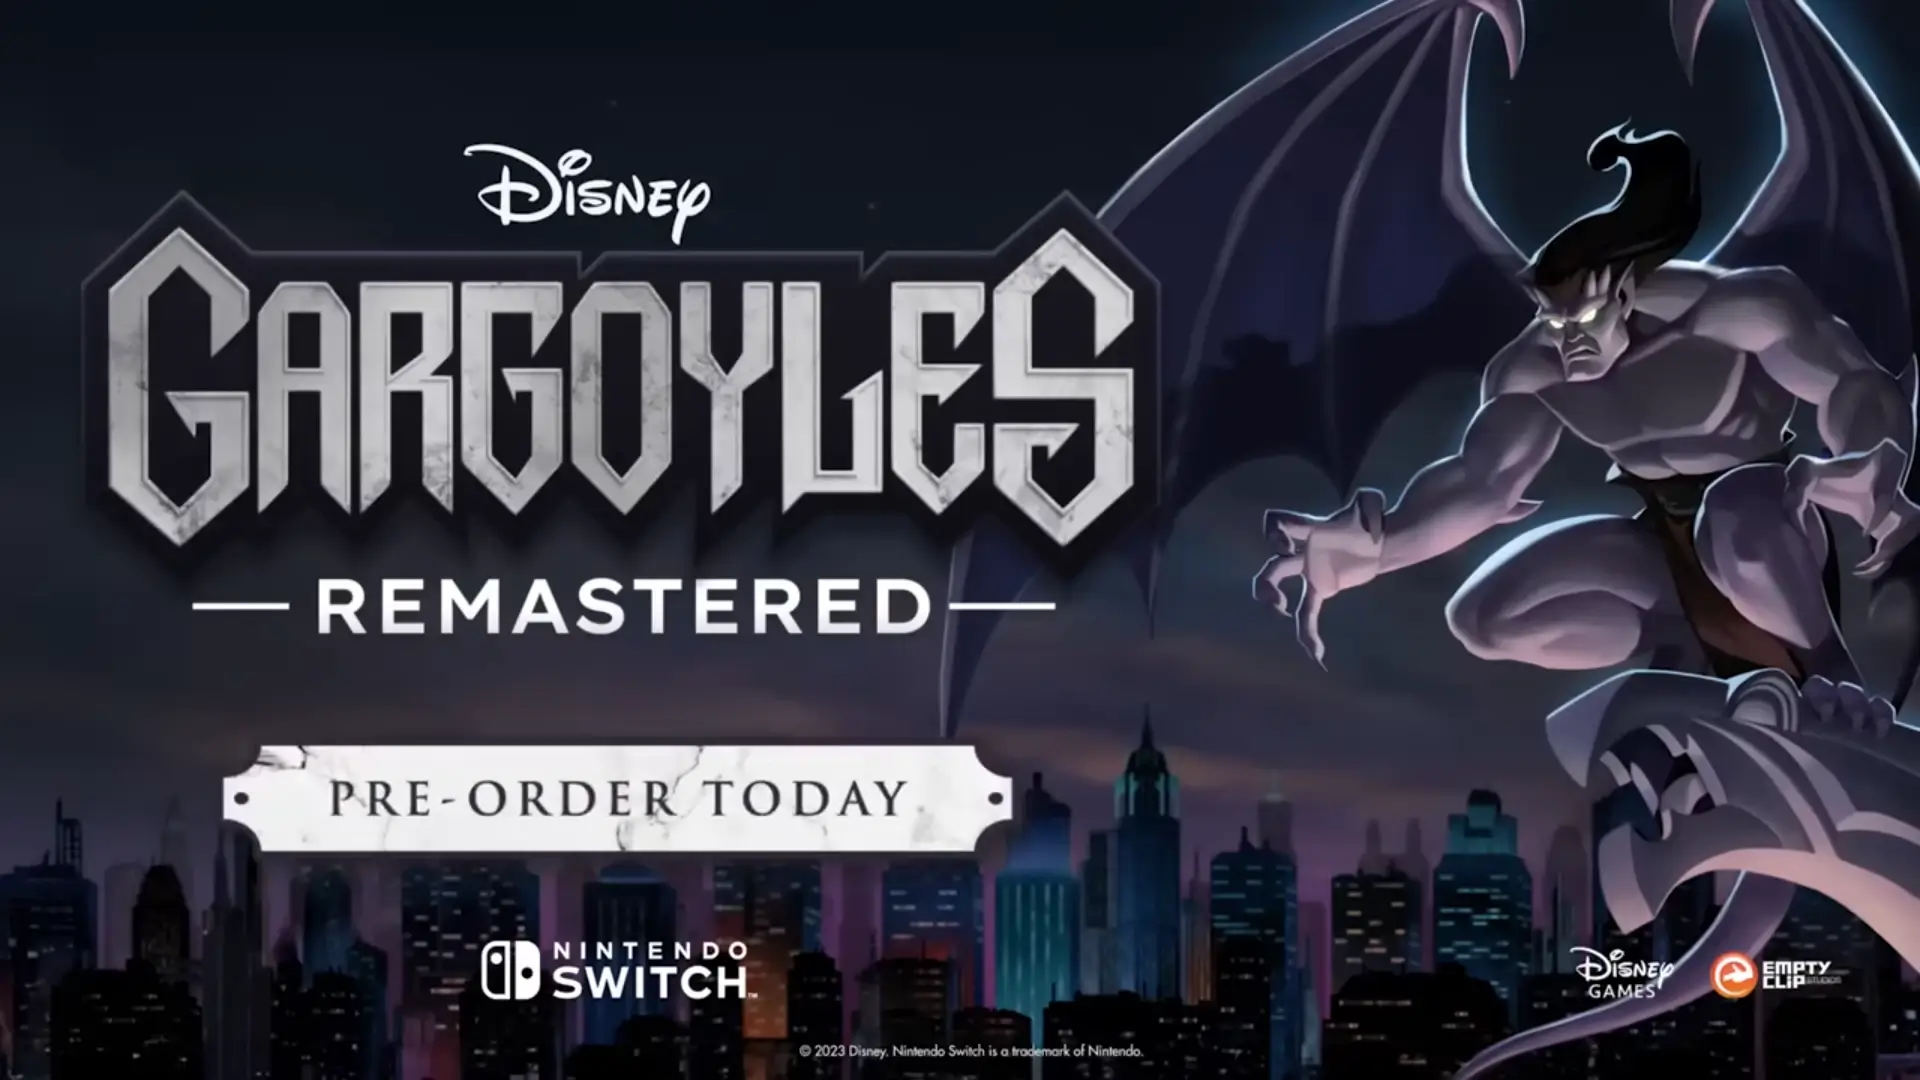 Disney Gargoyles Remastered Nintendo Switch Pre-Order Trailer